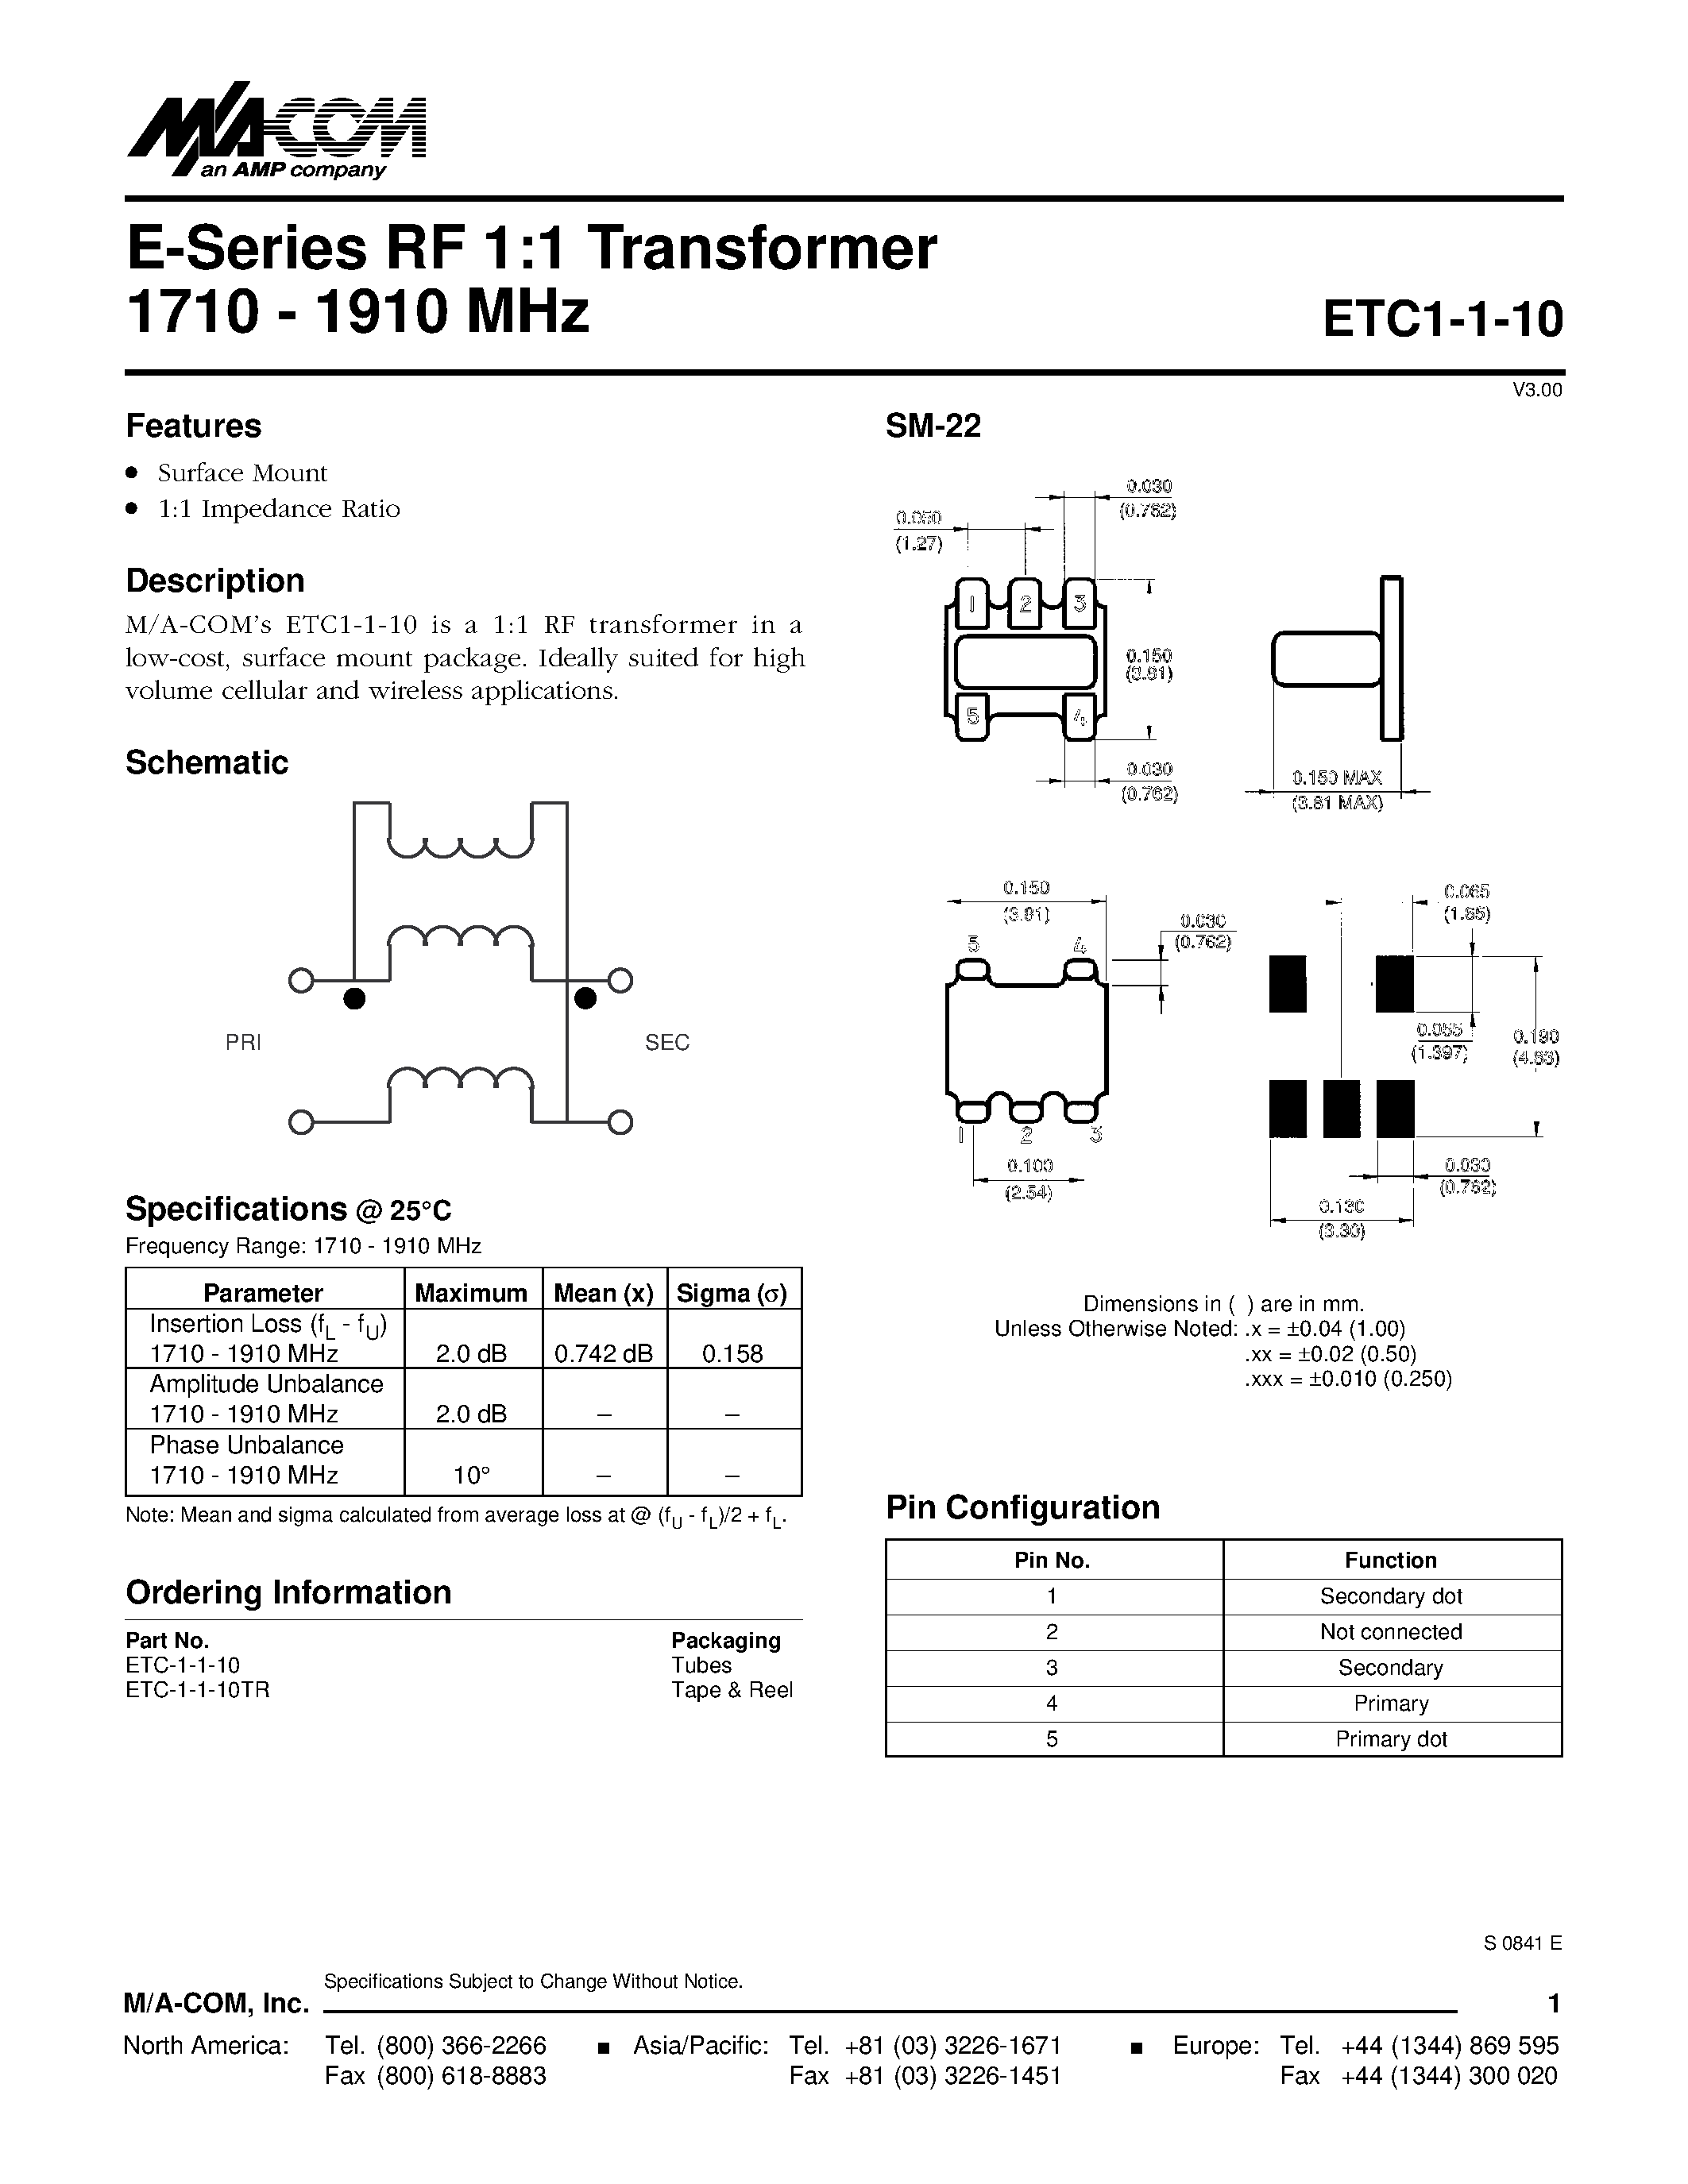 Даташит ETC-1-1-10TR-E-Series RF 1:1 Transformer 1710 - 1910 MHz страница 1